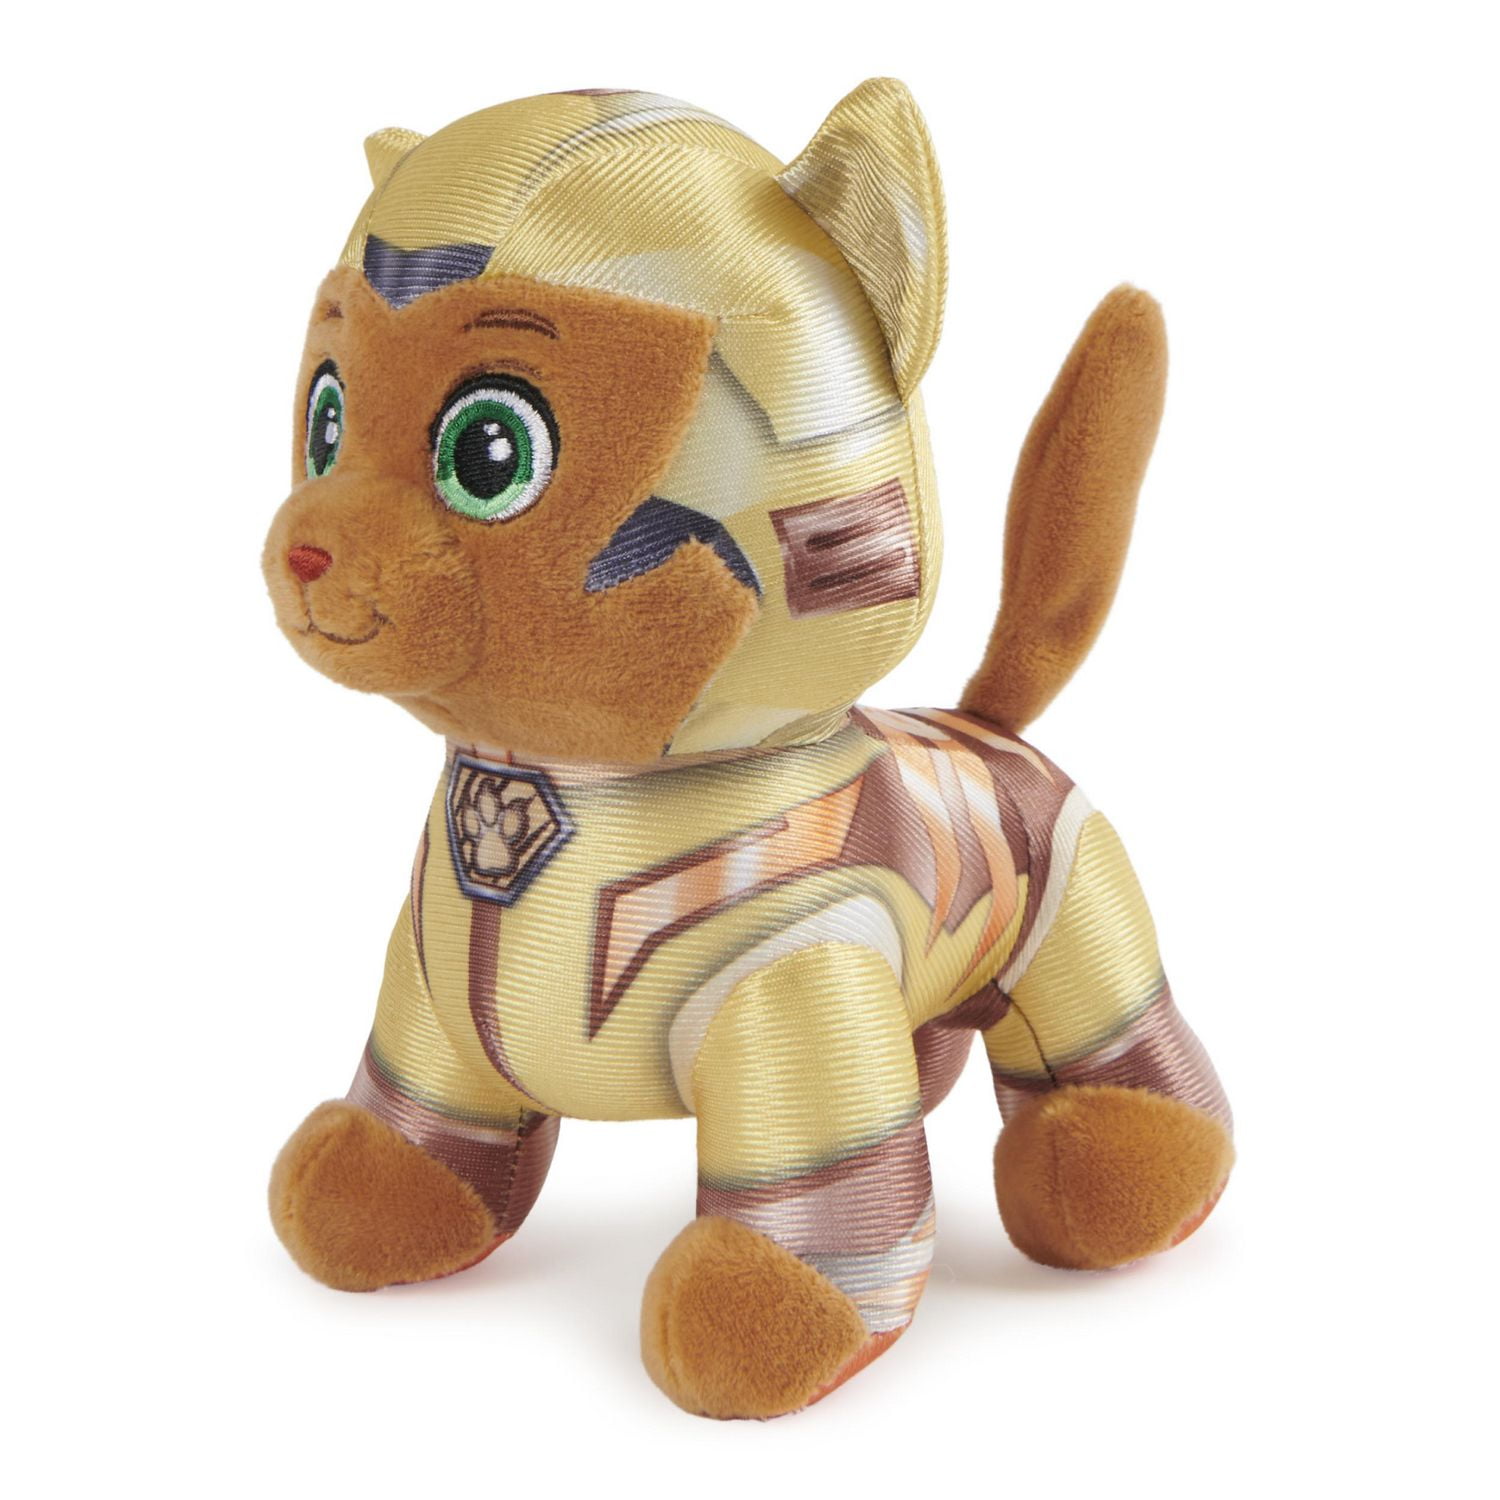 Leopard, Cat, Realistic Toy Model Plastic Replica Animal, Kids Educational  Gift 5 M105 B645